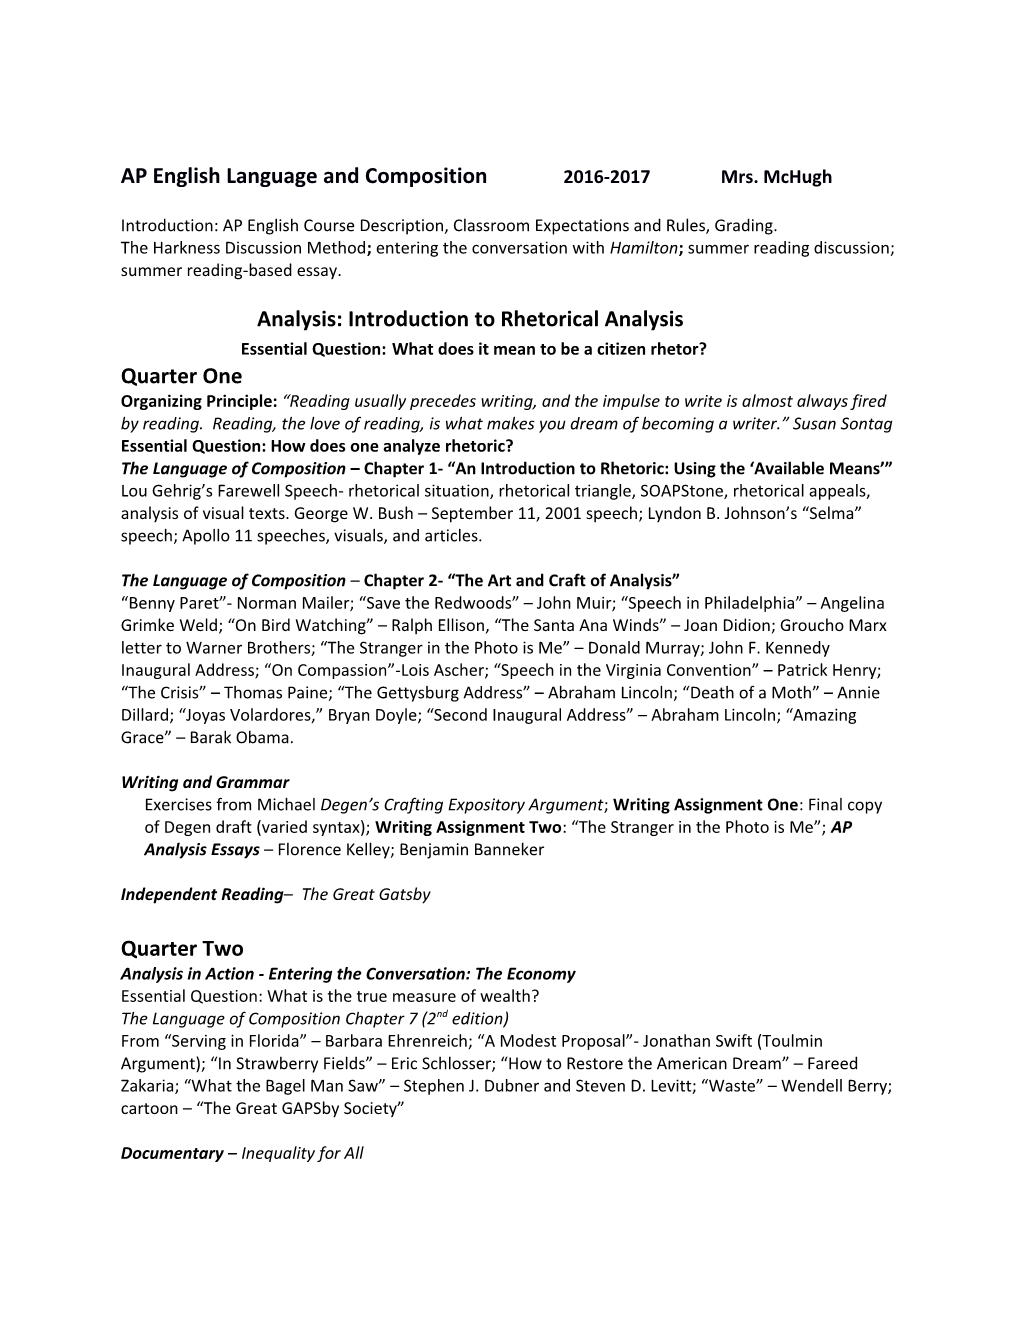 AP English Language and Composition 2016-2017Mrs. Mchugh